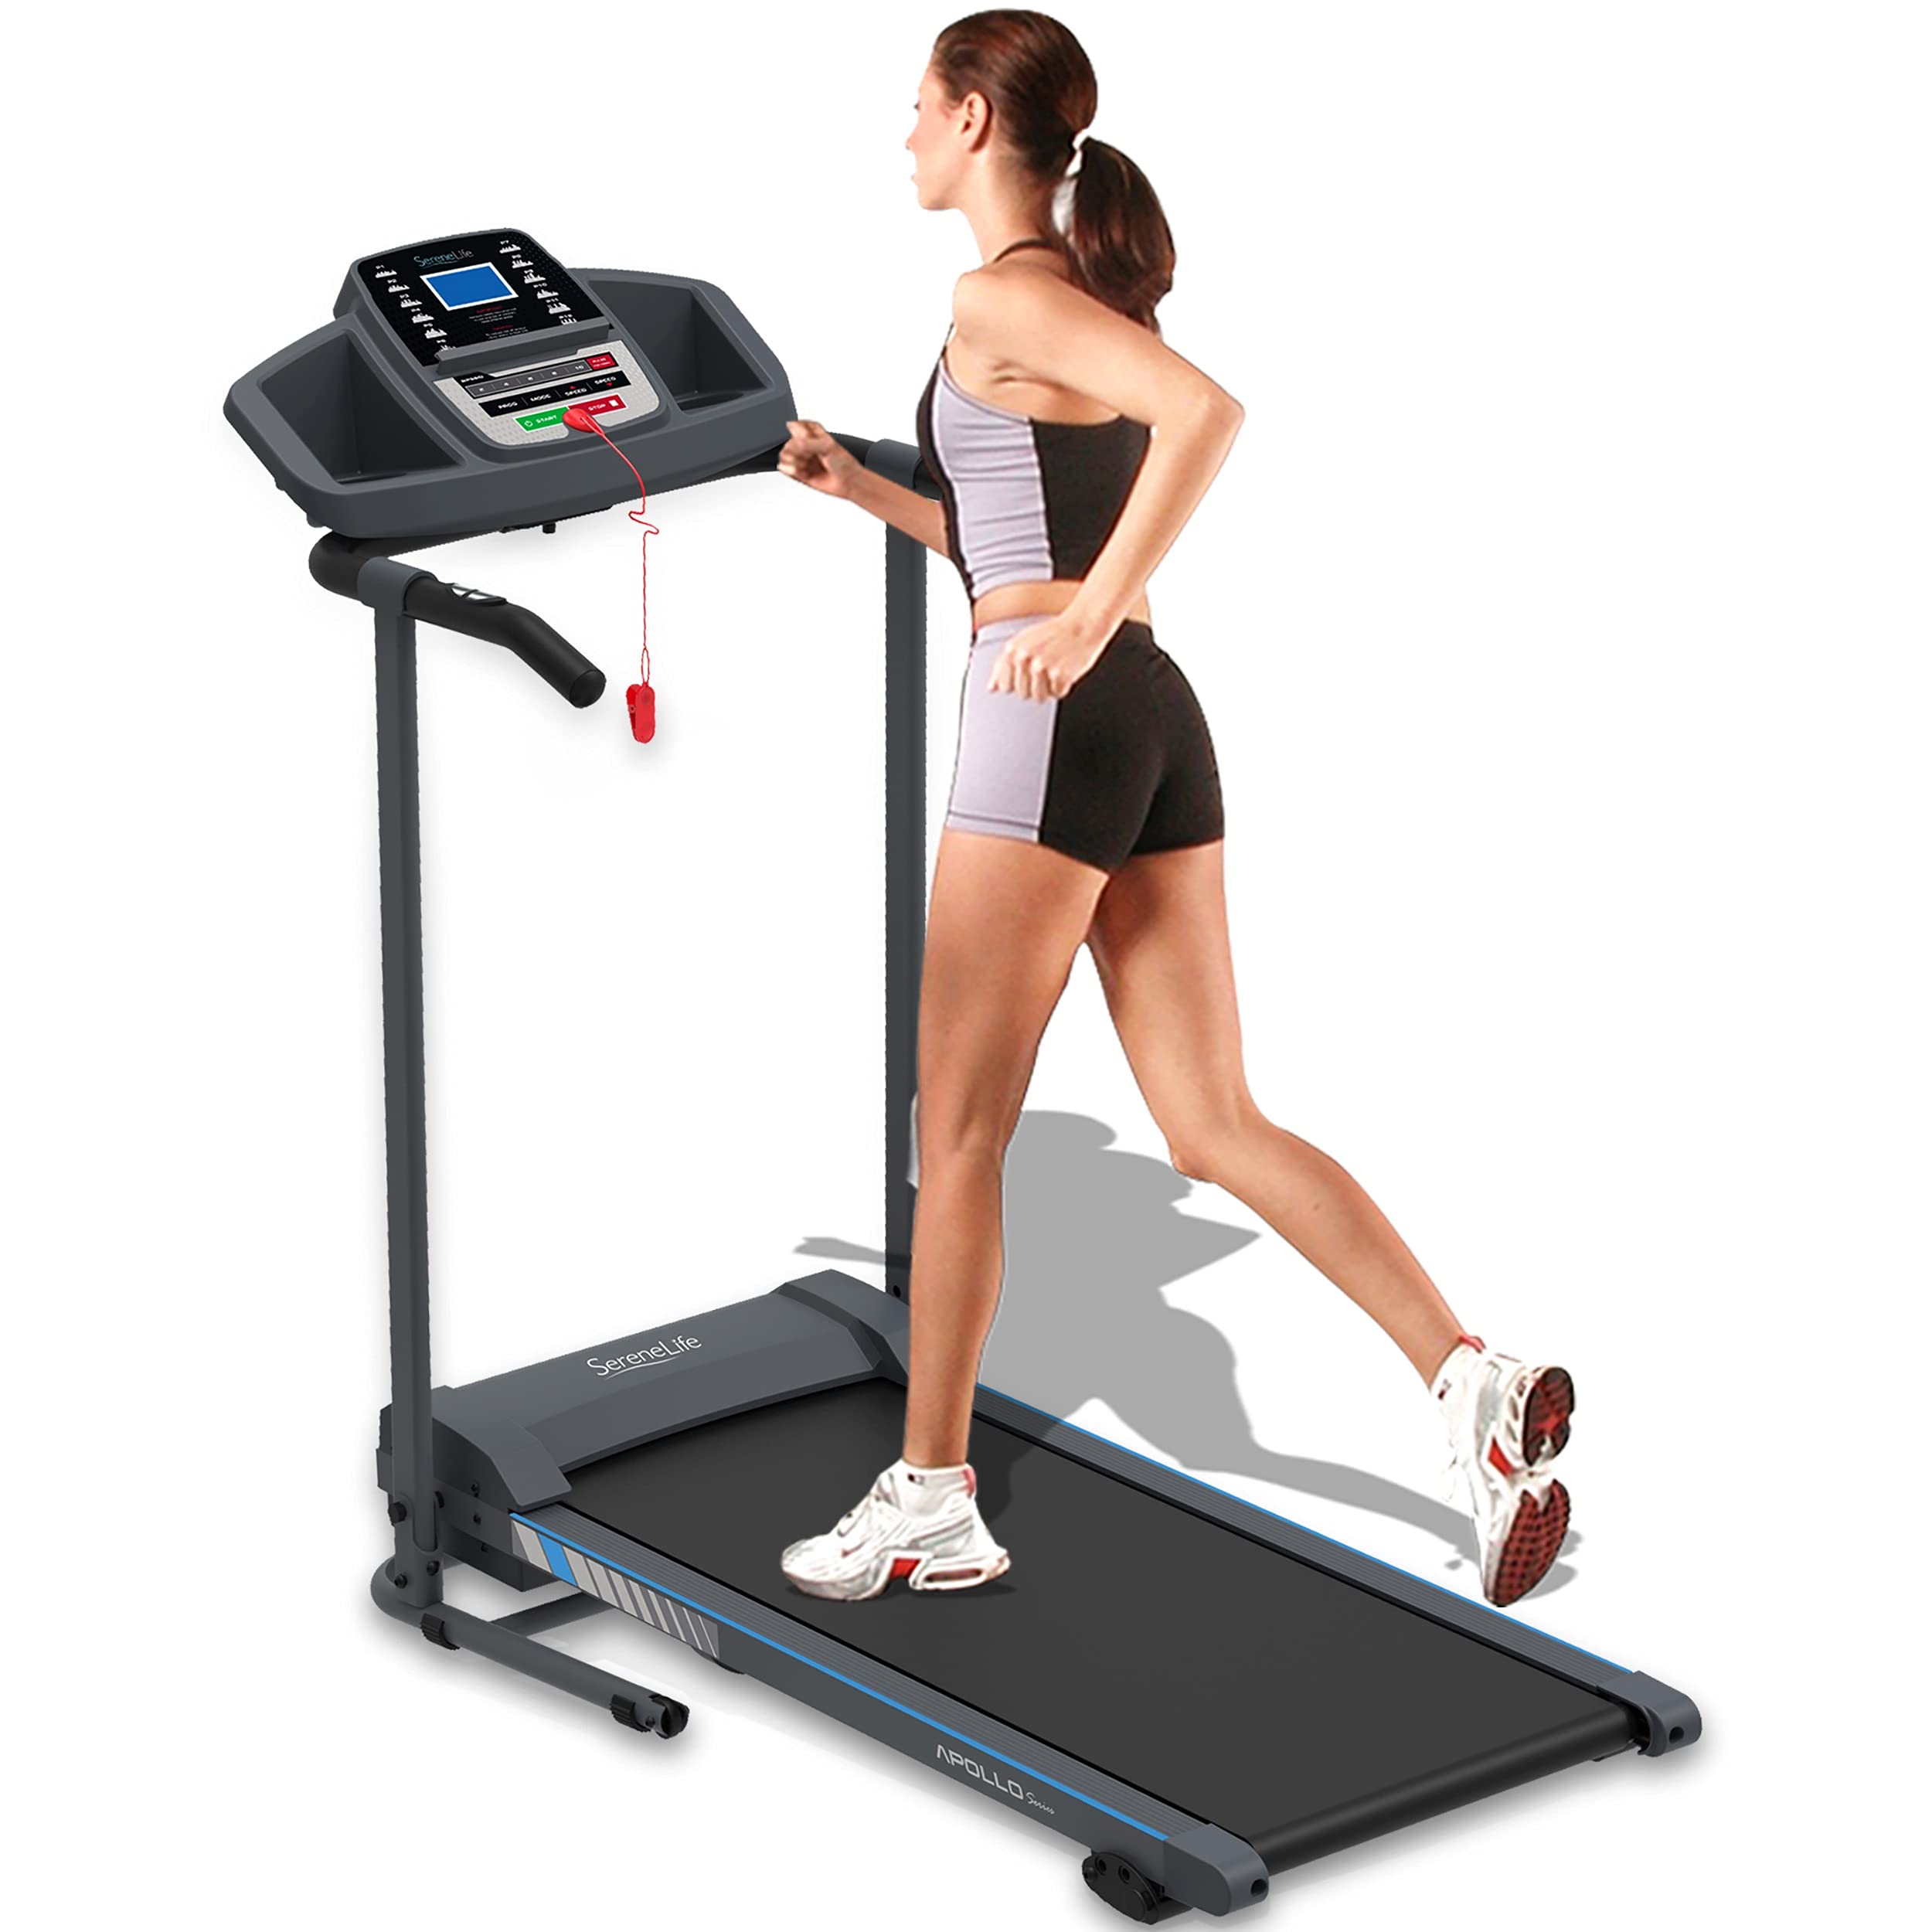 SereneLife Folding Treadmill - Foldable Home Fitness Eq...